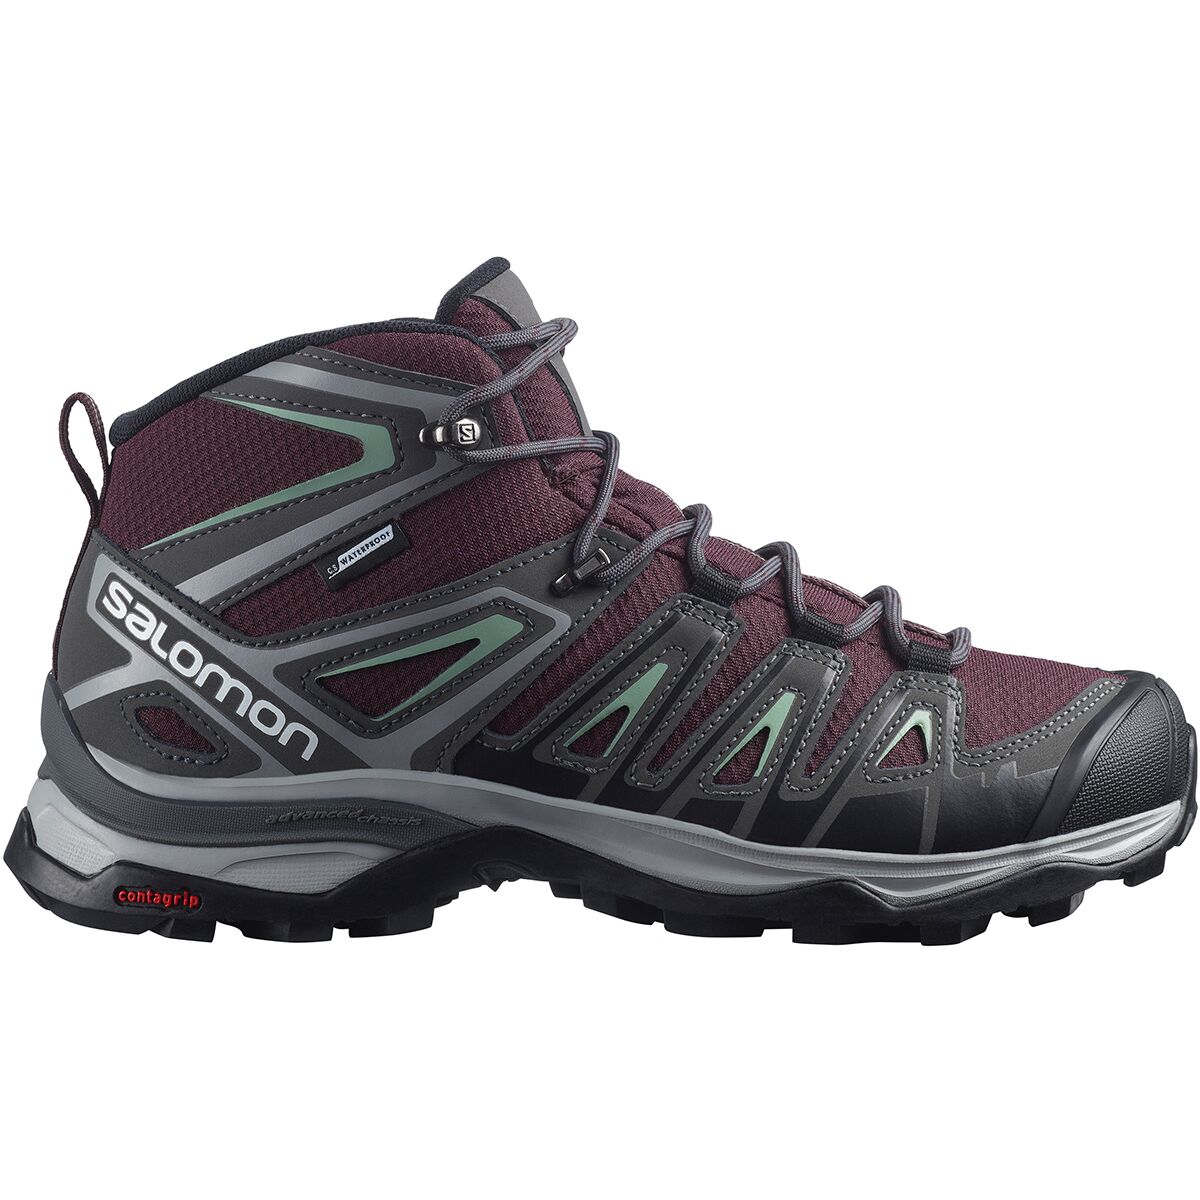 Salomon X Ultra Pioneer Mid CSWP Hiking Boot - Women's